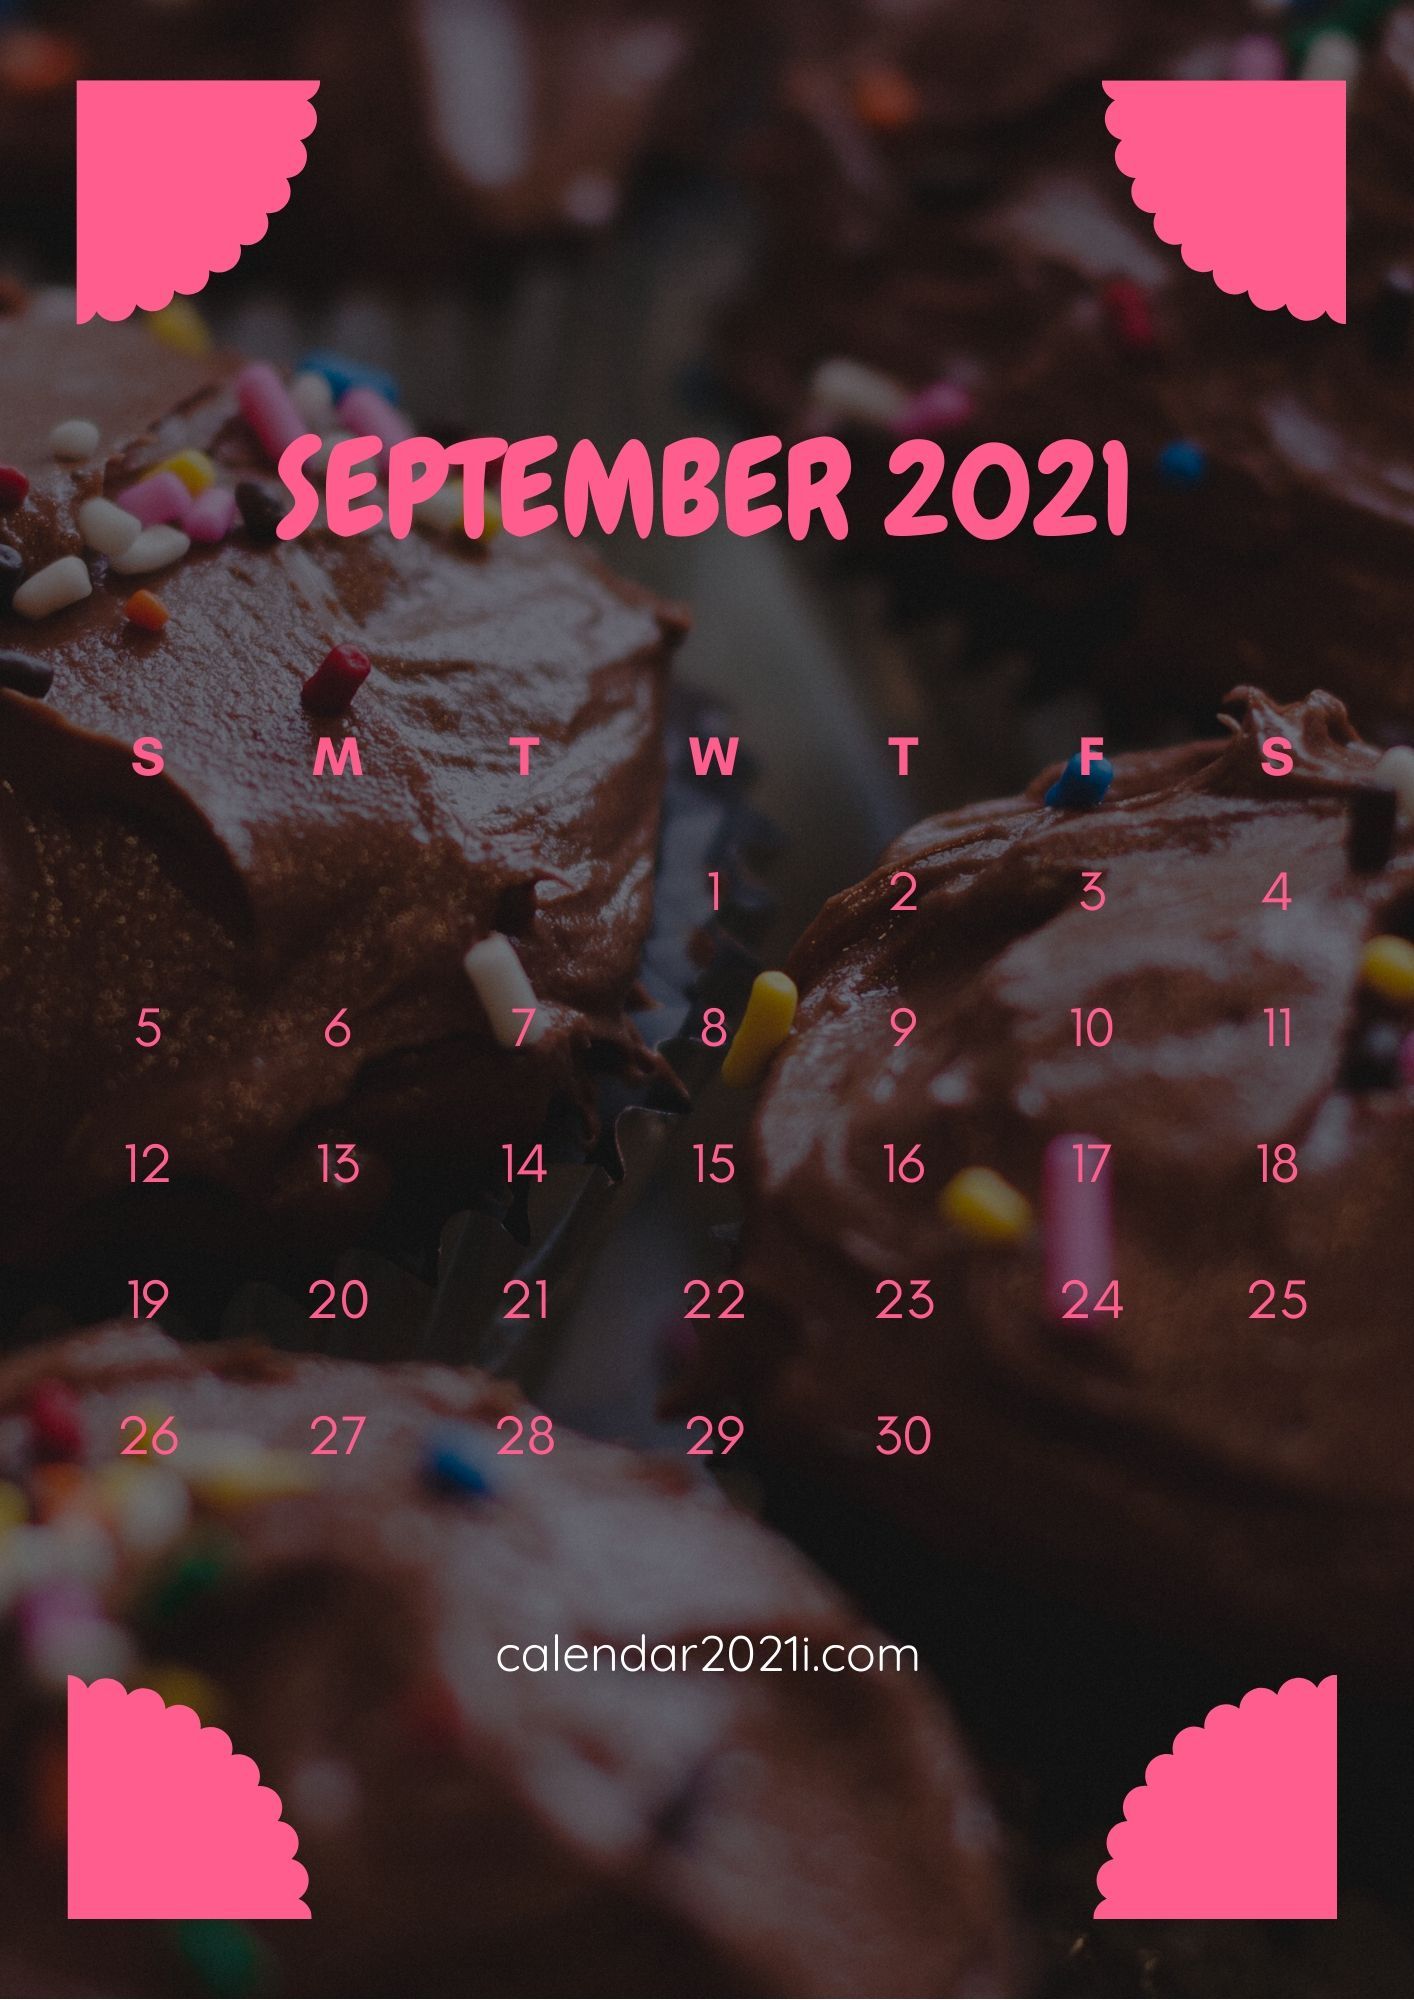 iPhone 2021 Calendar HD Wallpapers Calendar 2021 in 2021 1414x2000